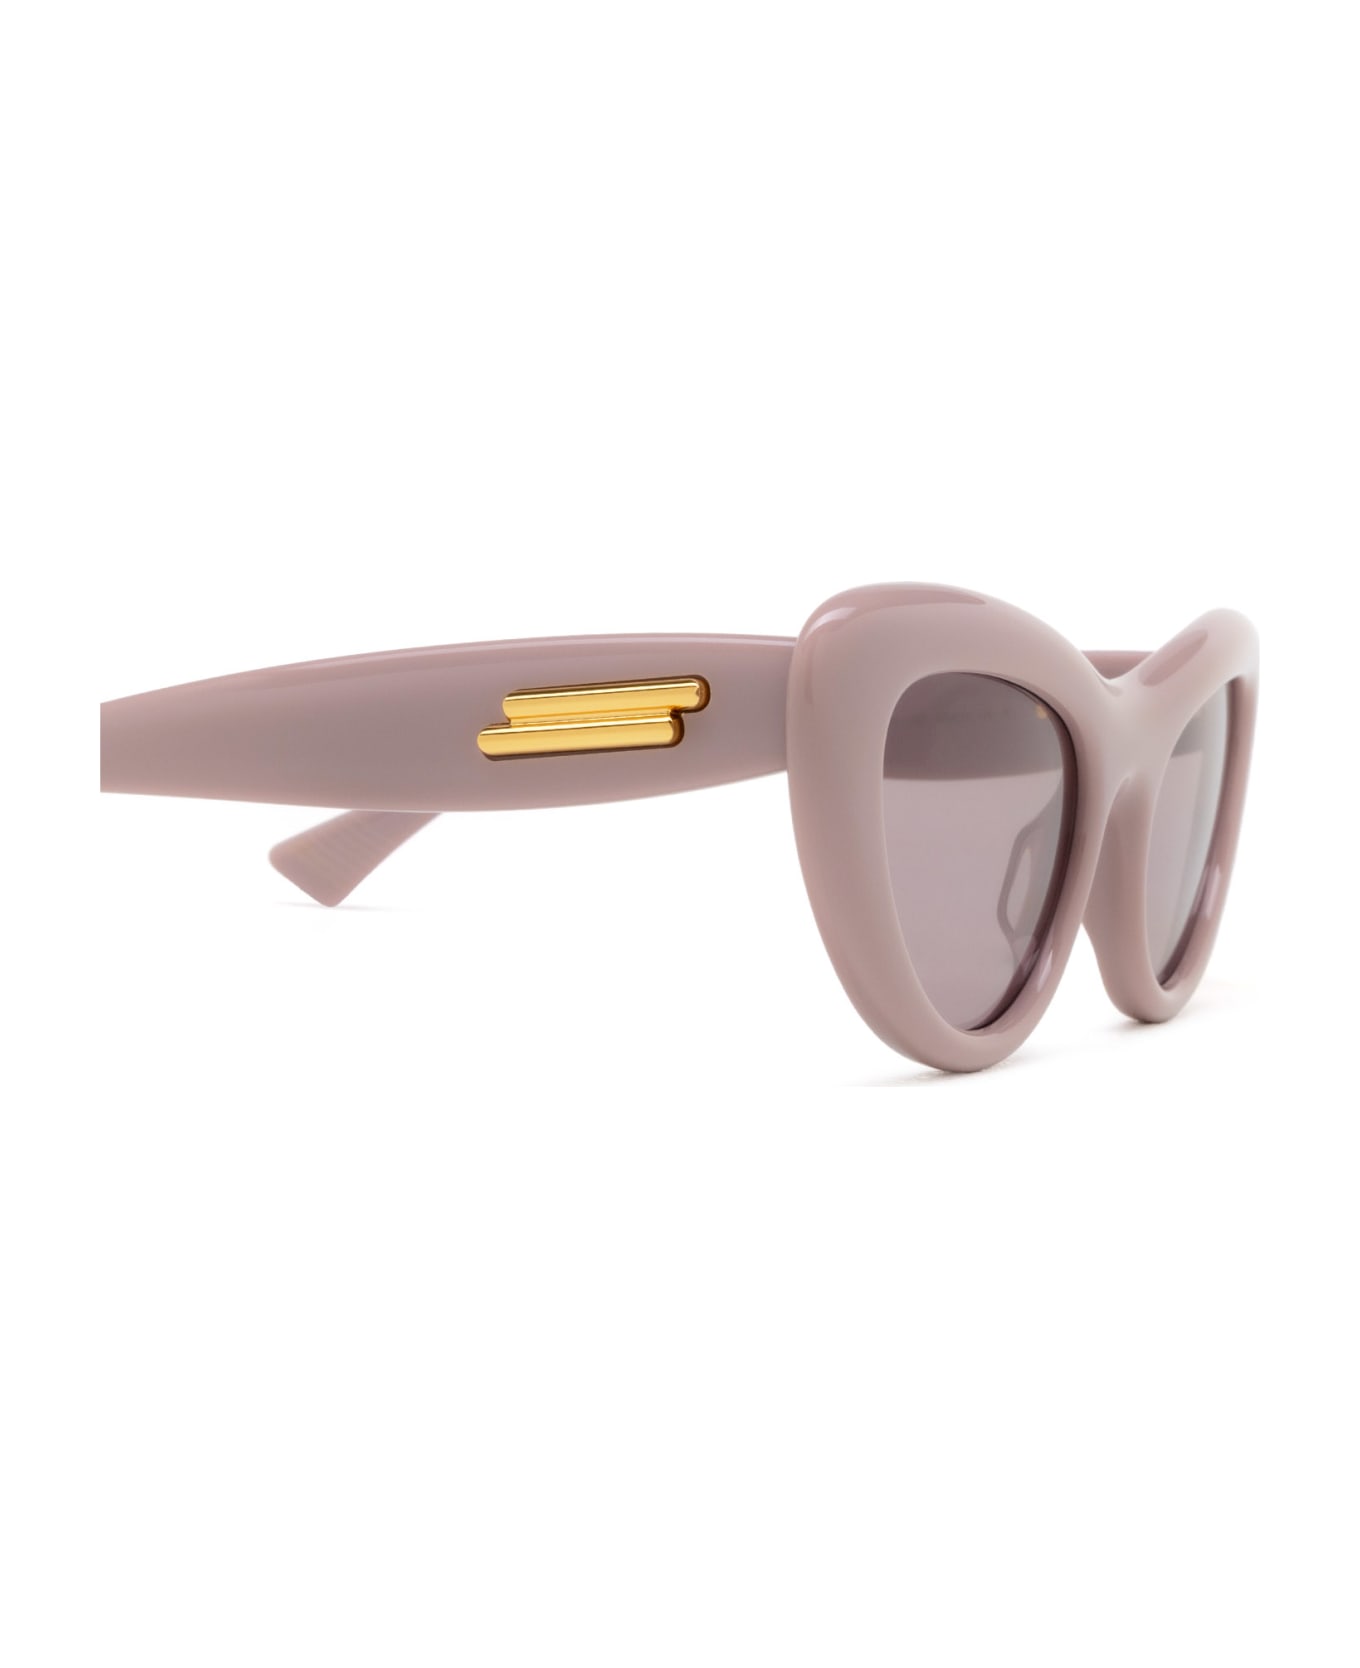 Bottega Veneta Eyewear Bv1282s Burgundy Sunglasses - Burgundy